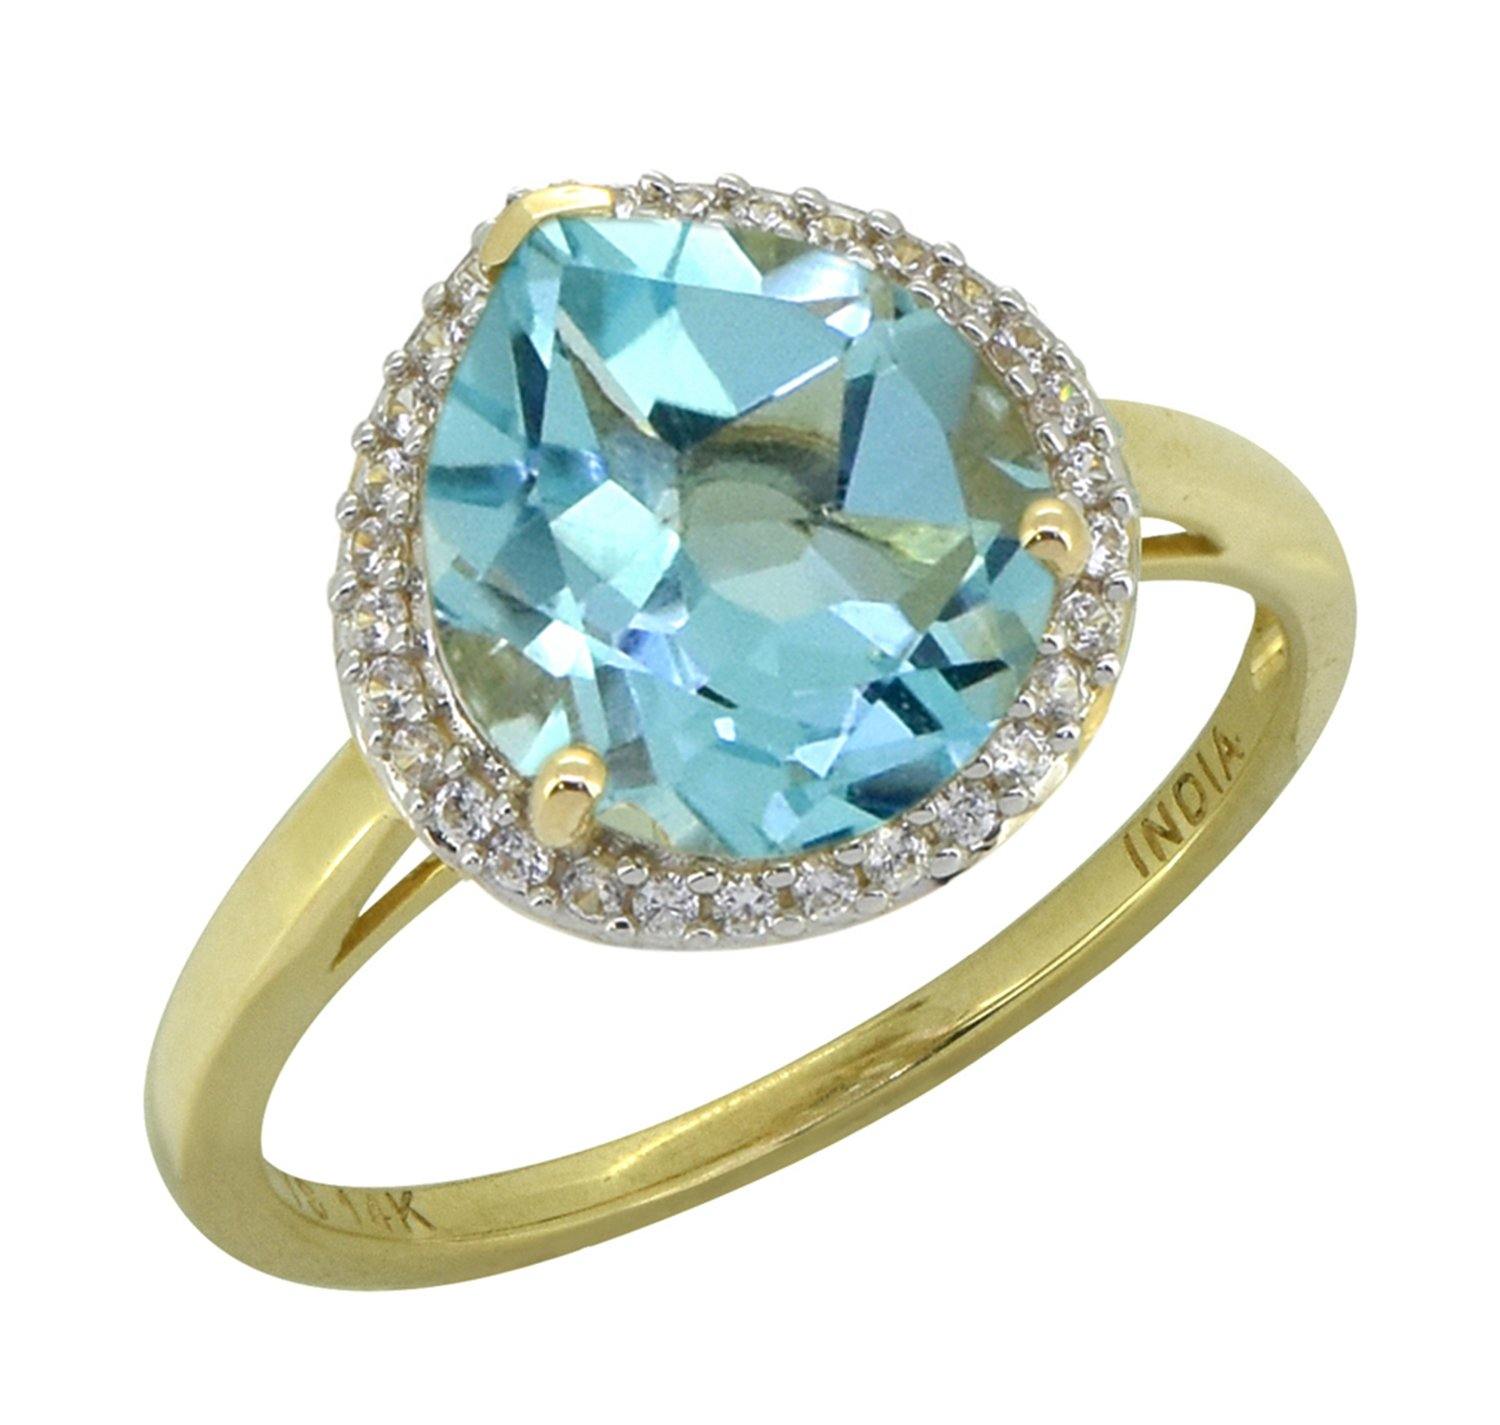 3.61 Ct. Sky Blue Topaz White Zircon Solid 14k Yellow Gold Ring Jewelry - YoTreasure